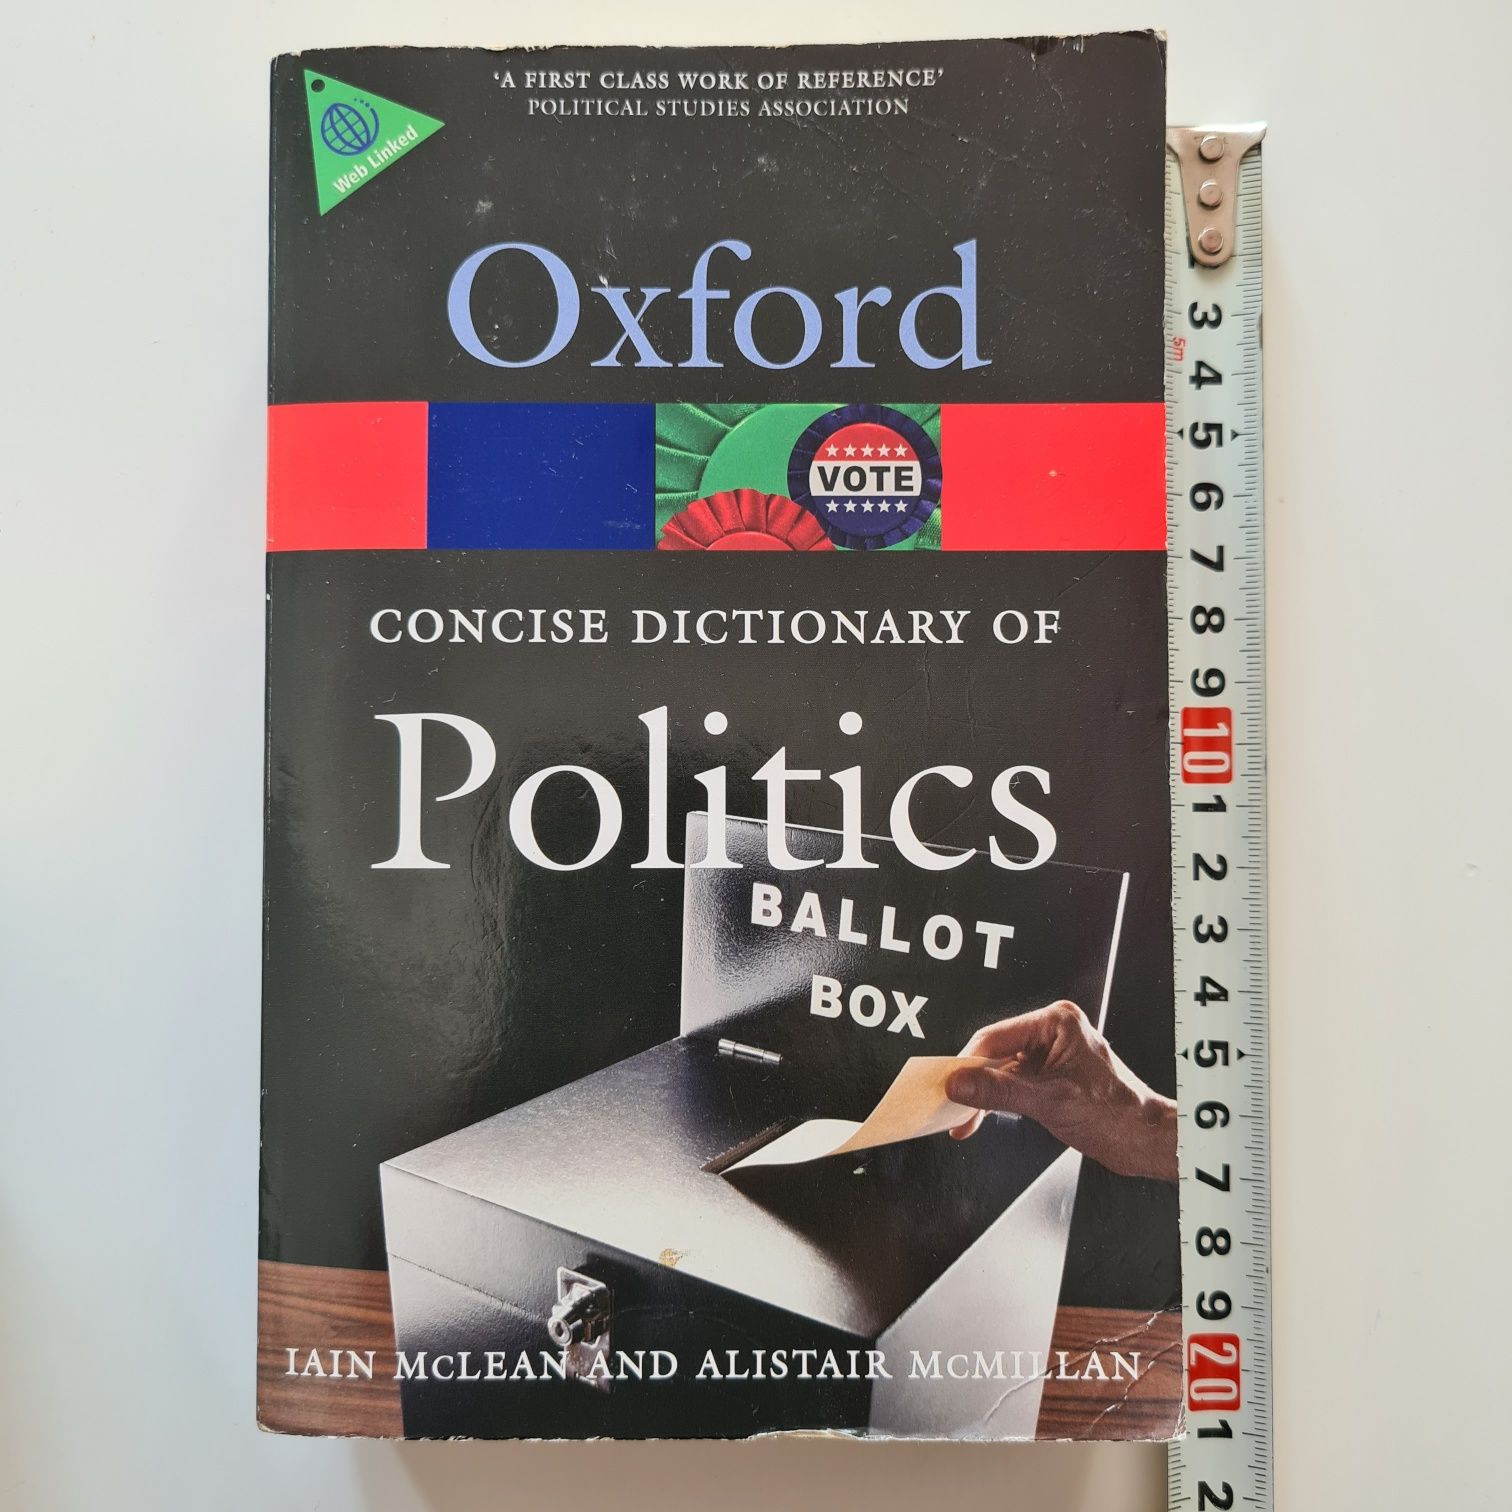 Речници по англ. ез. Oxford (Politics, Economics, Philosophy), Webster